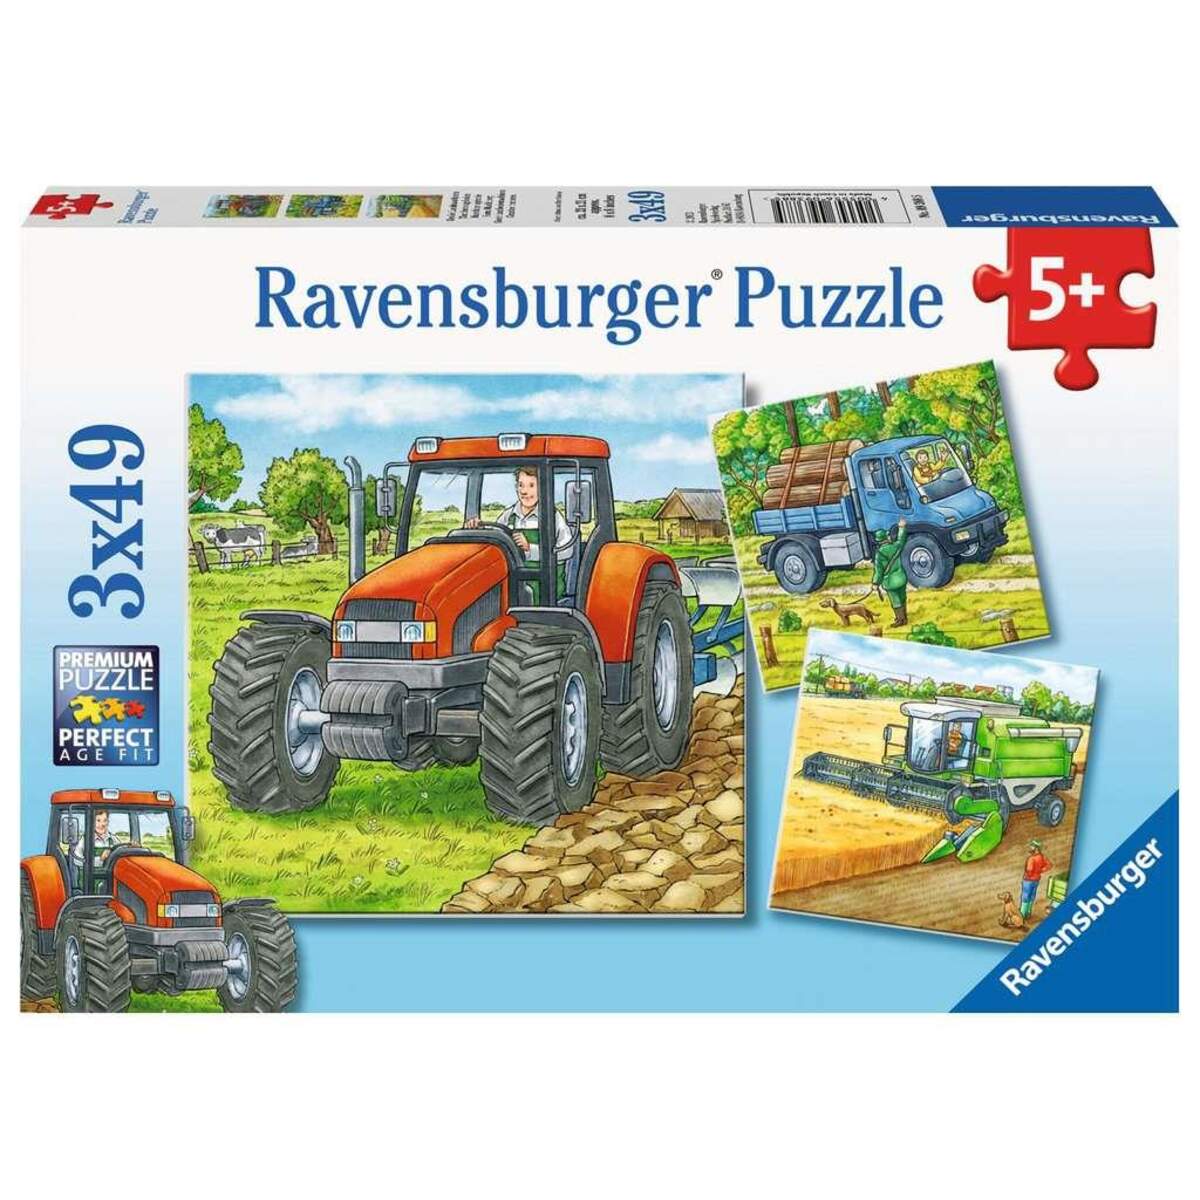 Ravensburger Puzzle Große Landmaschinen, 3 x 49 Teile